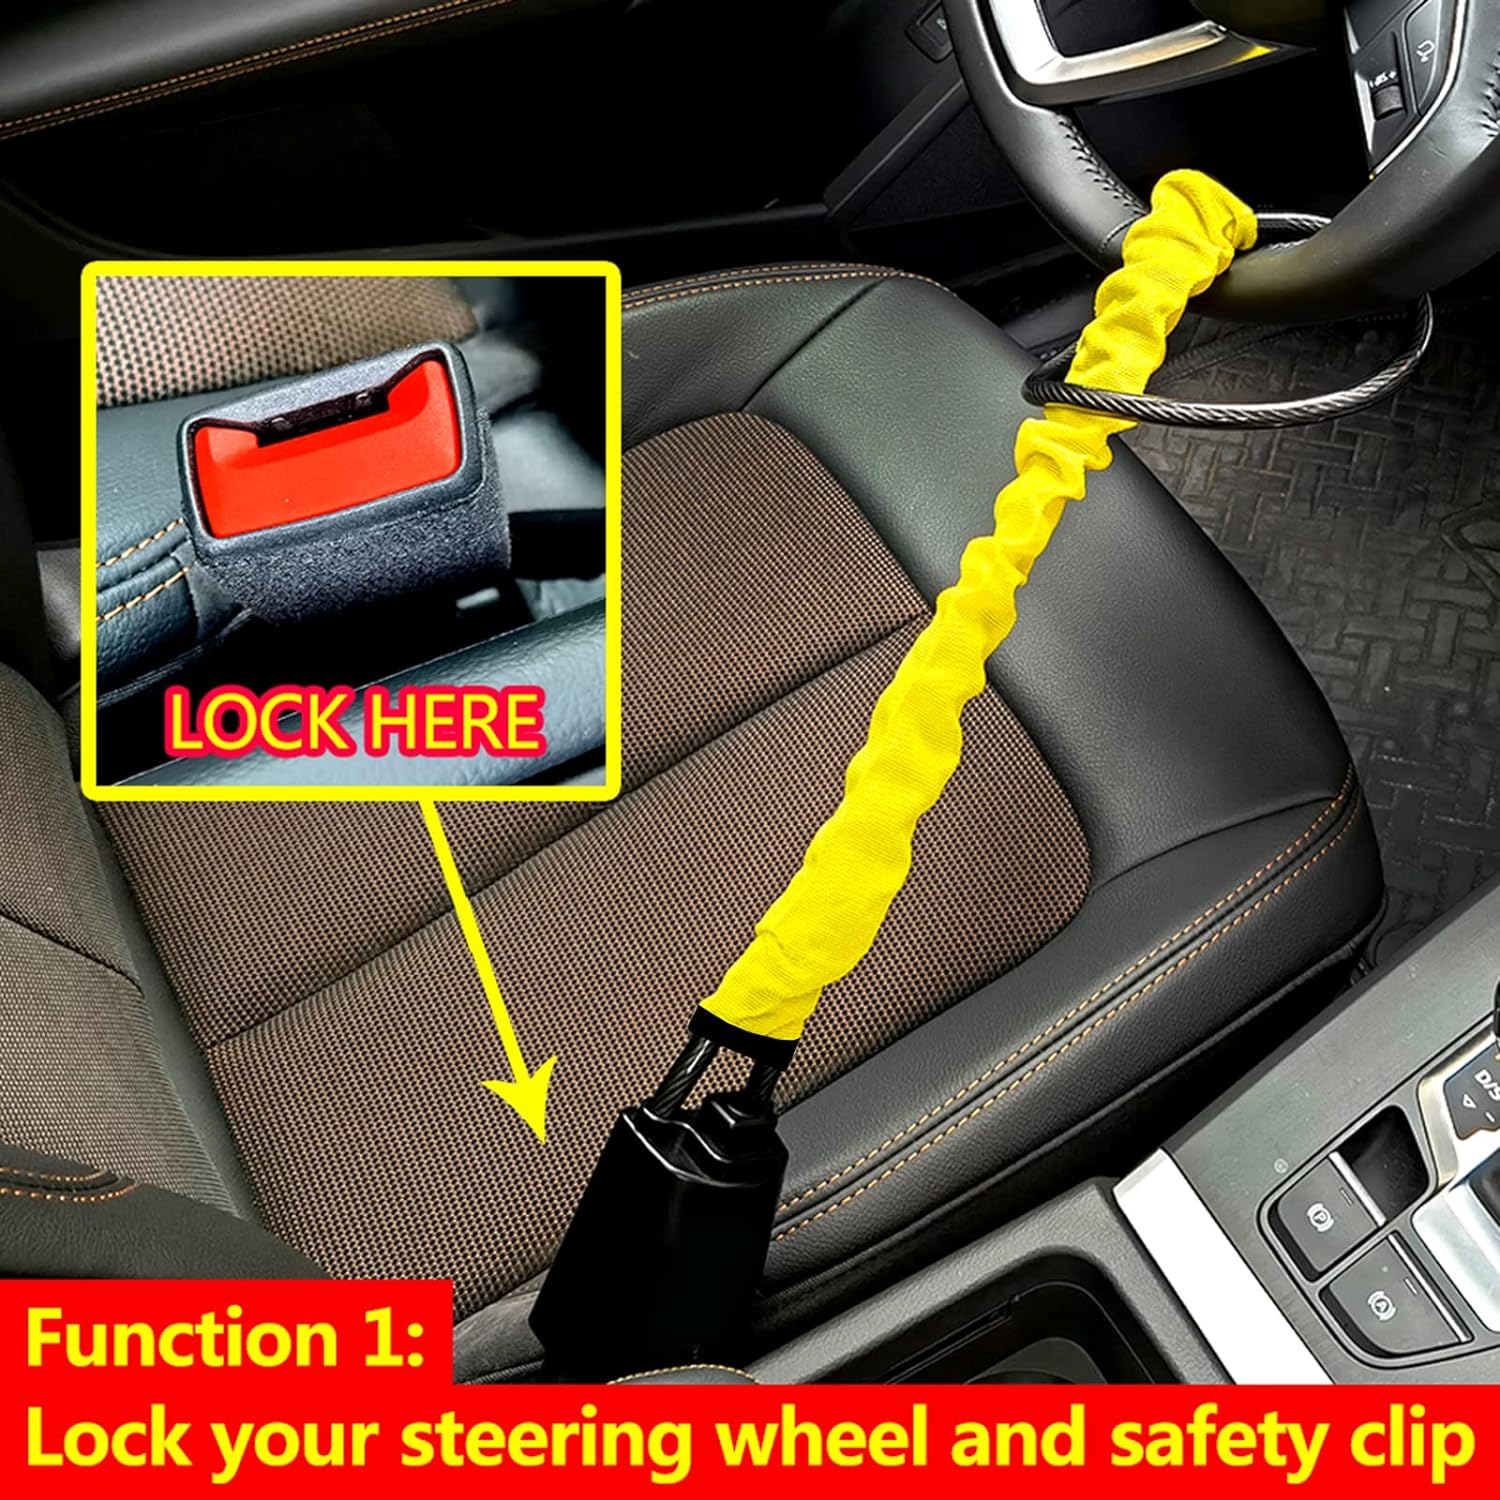 KAYCENTOP Steering Wheel Lock Seat Belt Lock Security Anti-Theft Handbag Lock Fit Most Cars Vehicle SUV Golf Cart